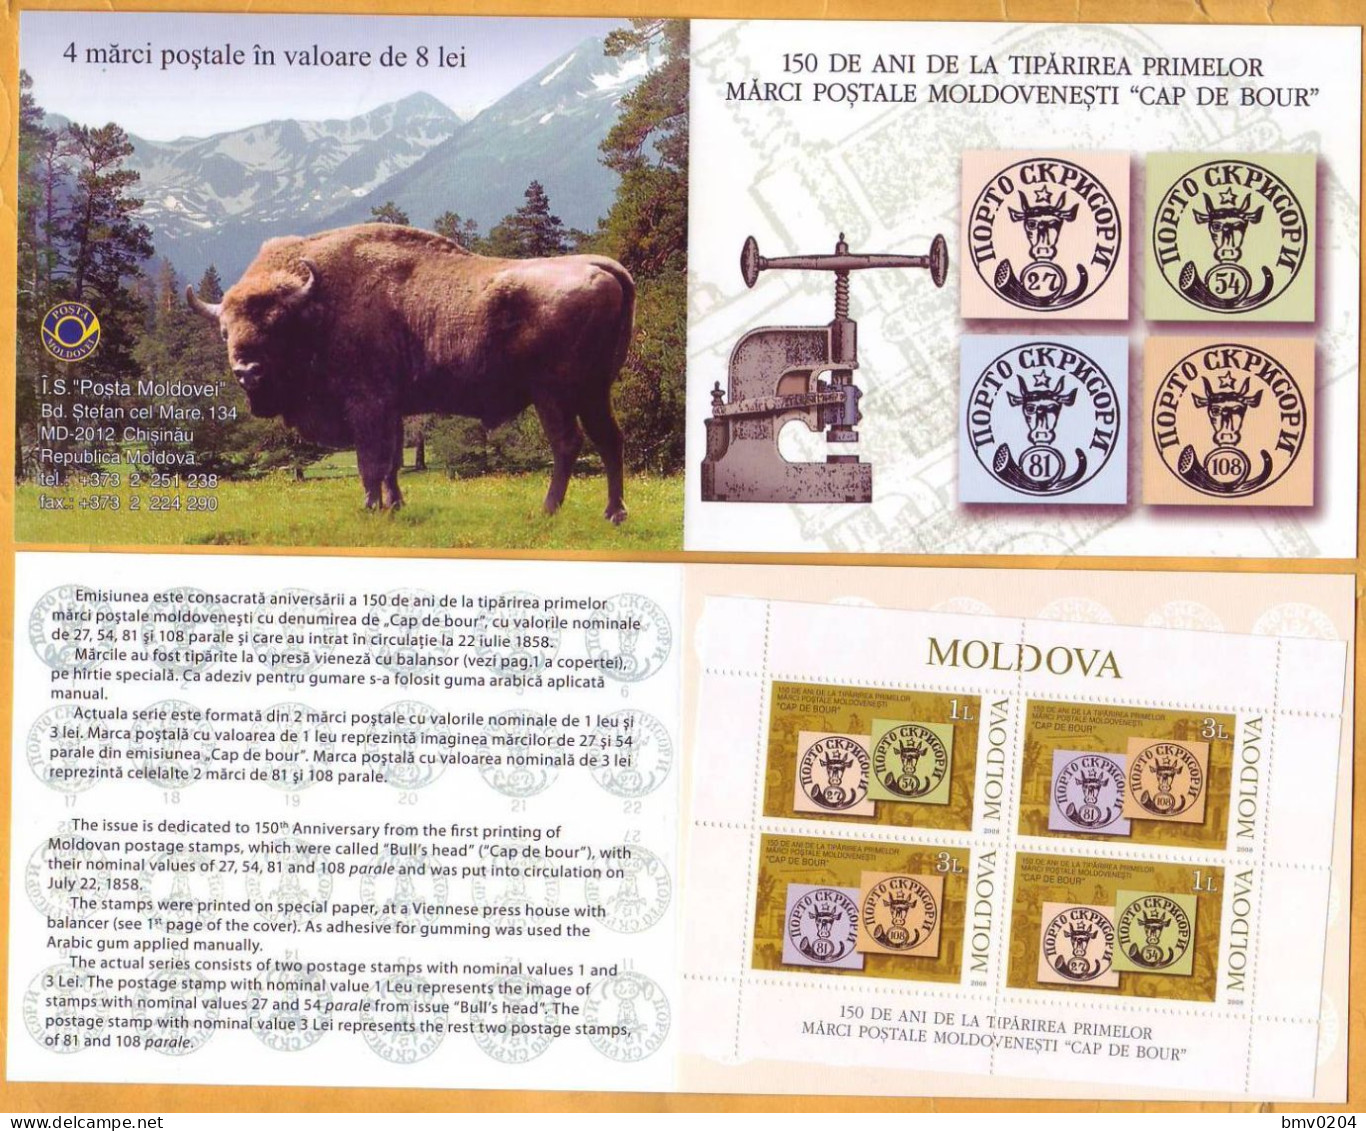 2008 Moldova Moldavie  Booklet 150. Edition Of The First Postage Stamps Of The Moldavian Principality "Cap De Bour". - Moldova